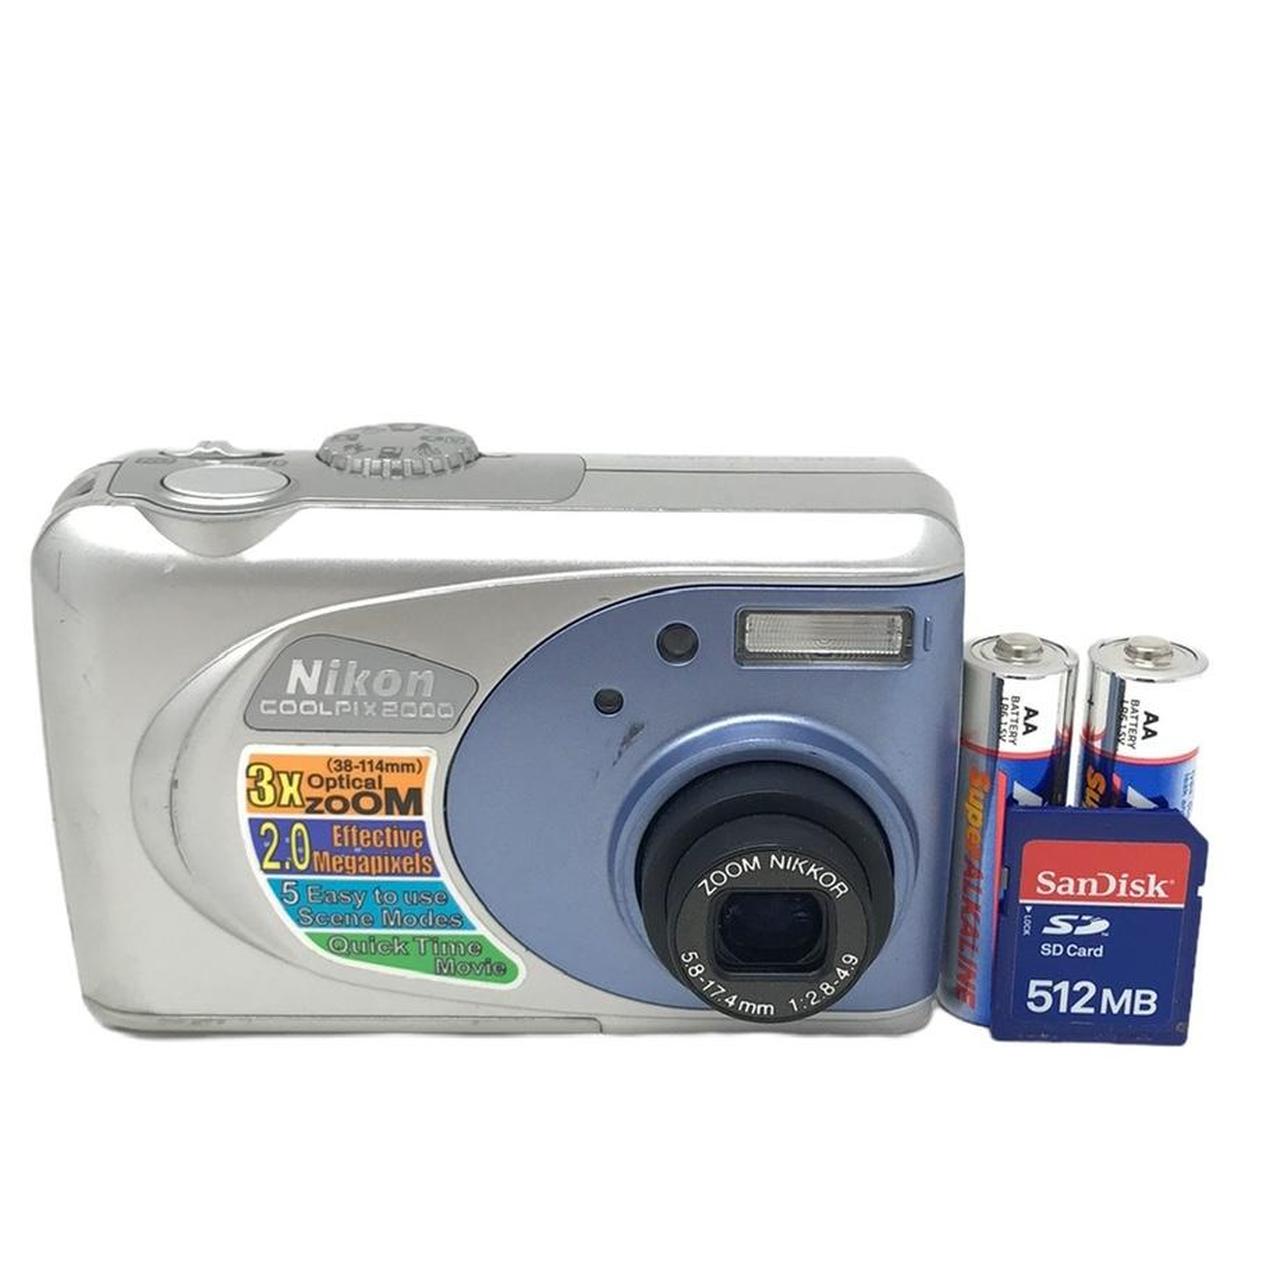 Product Image 1 - Nikon Coolpix 2000 Digital Camera

Comes